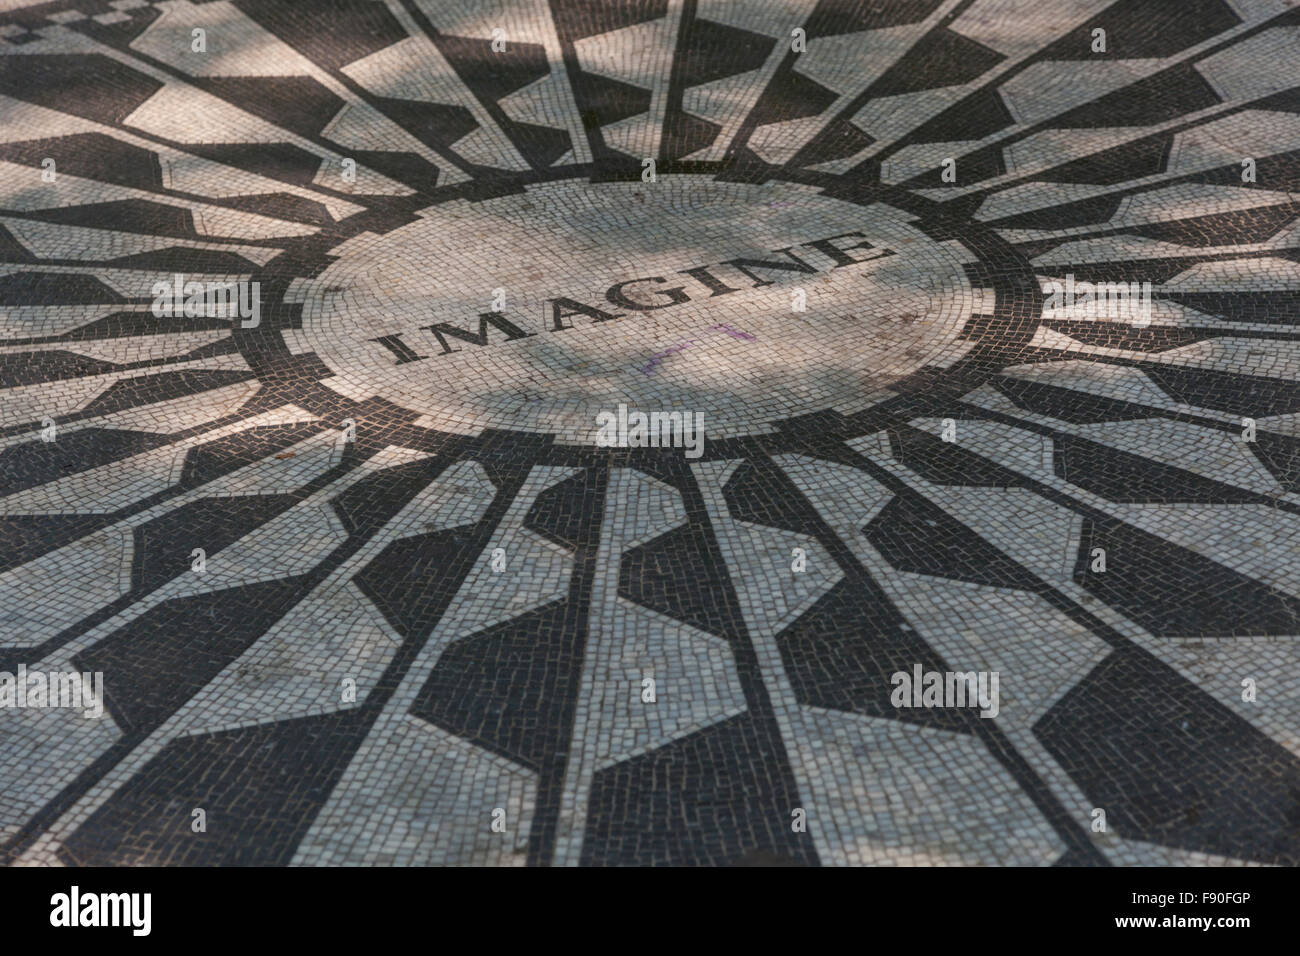 John Lennon Imagine memorial, dans Central Park, New York, USA Banque D'Images